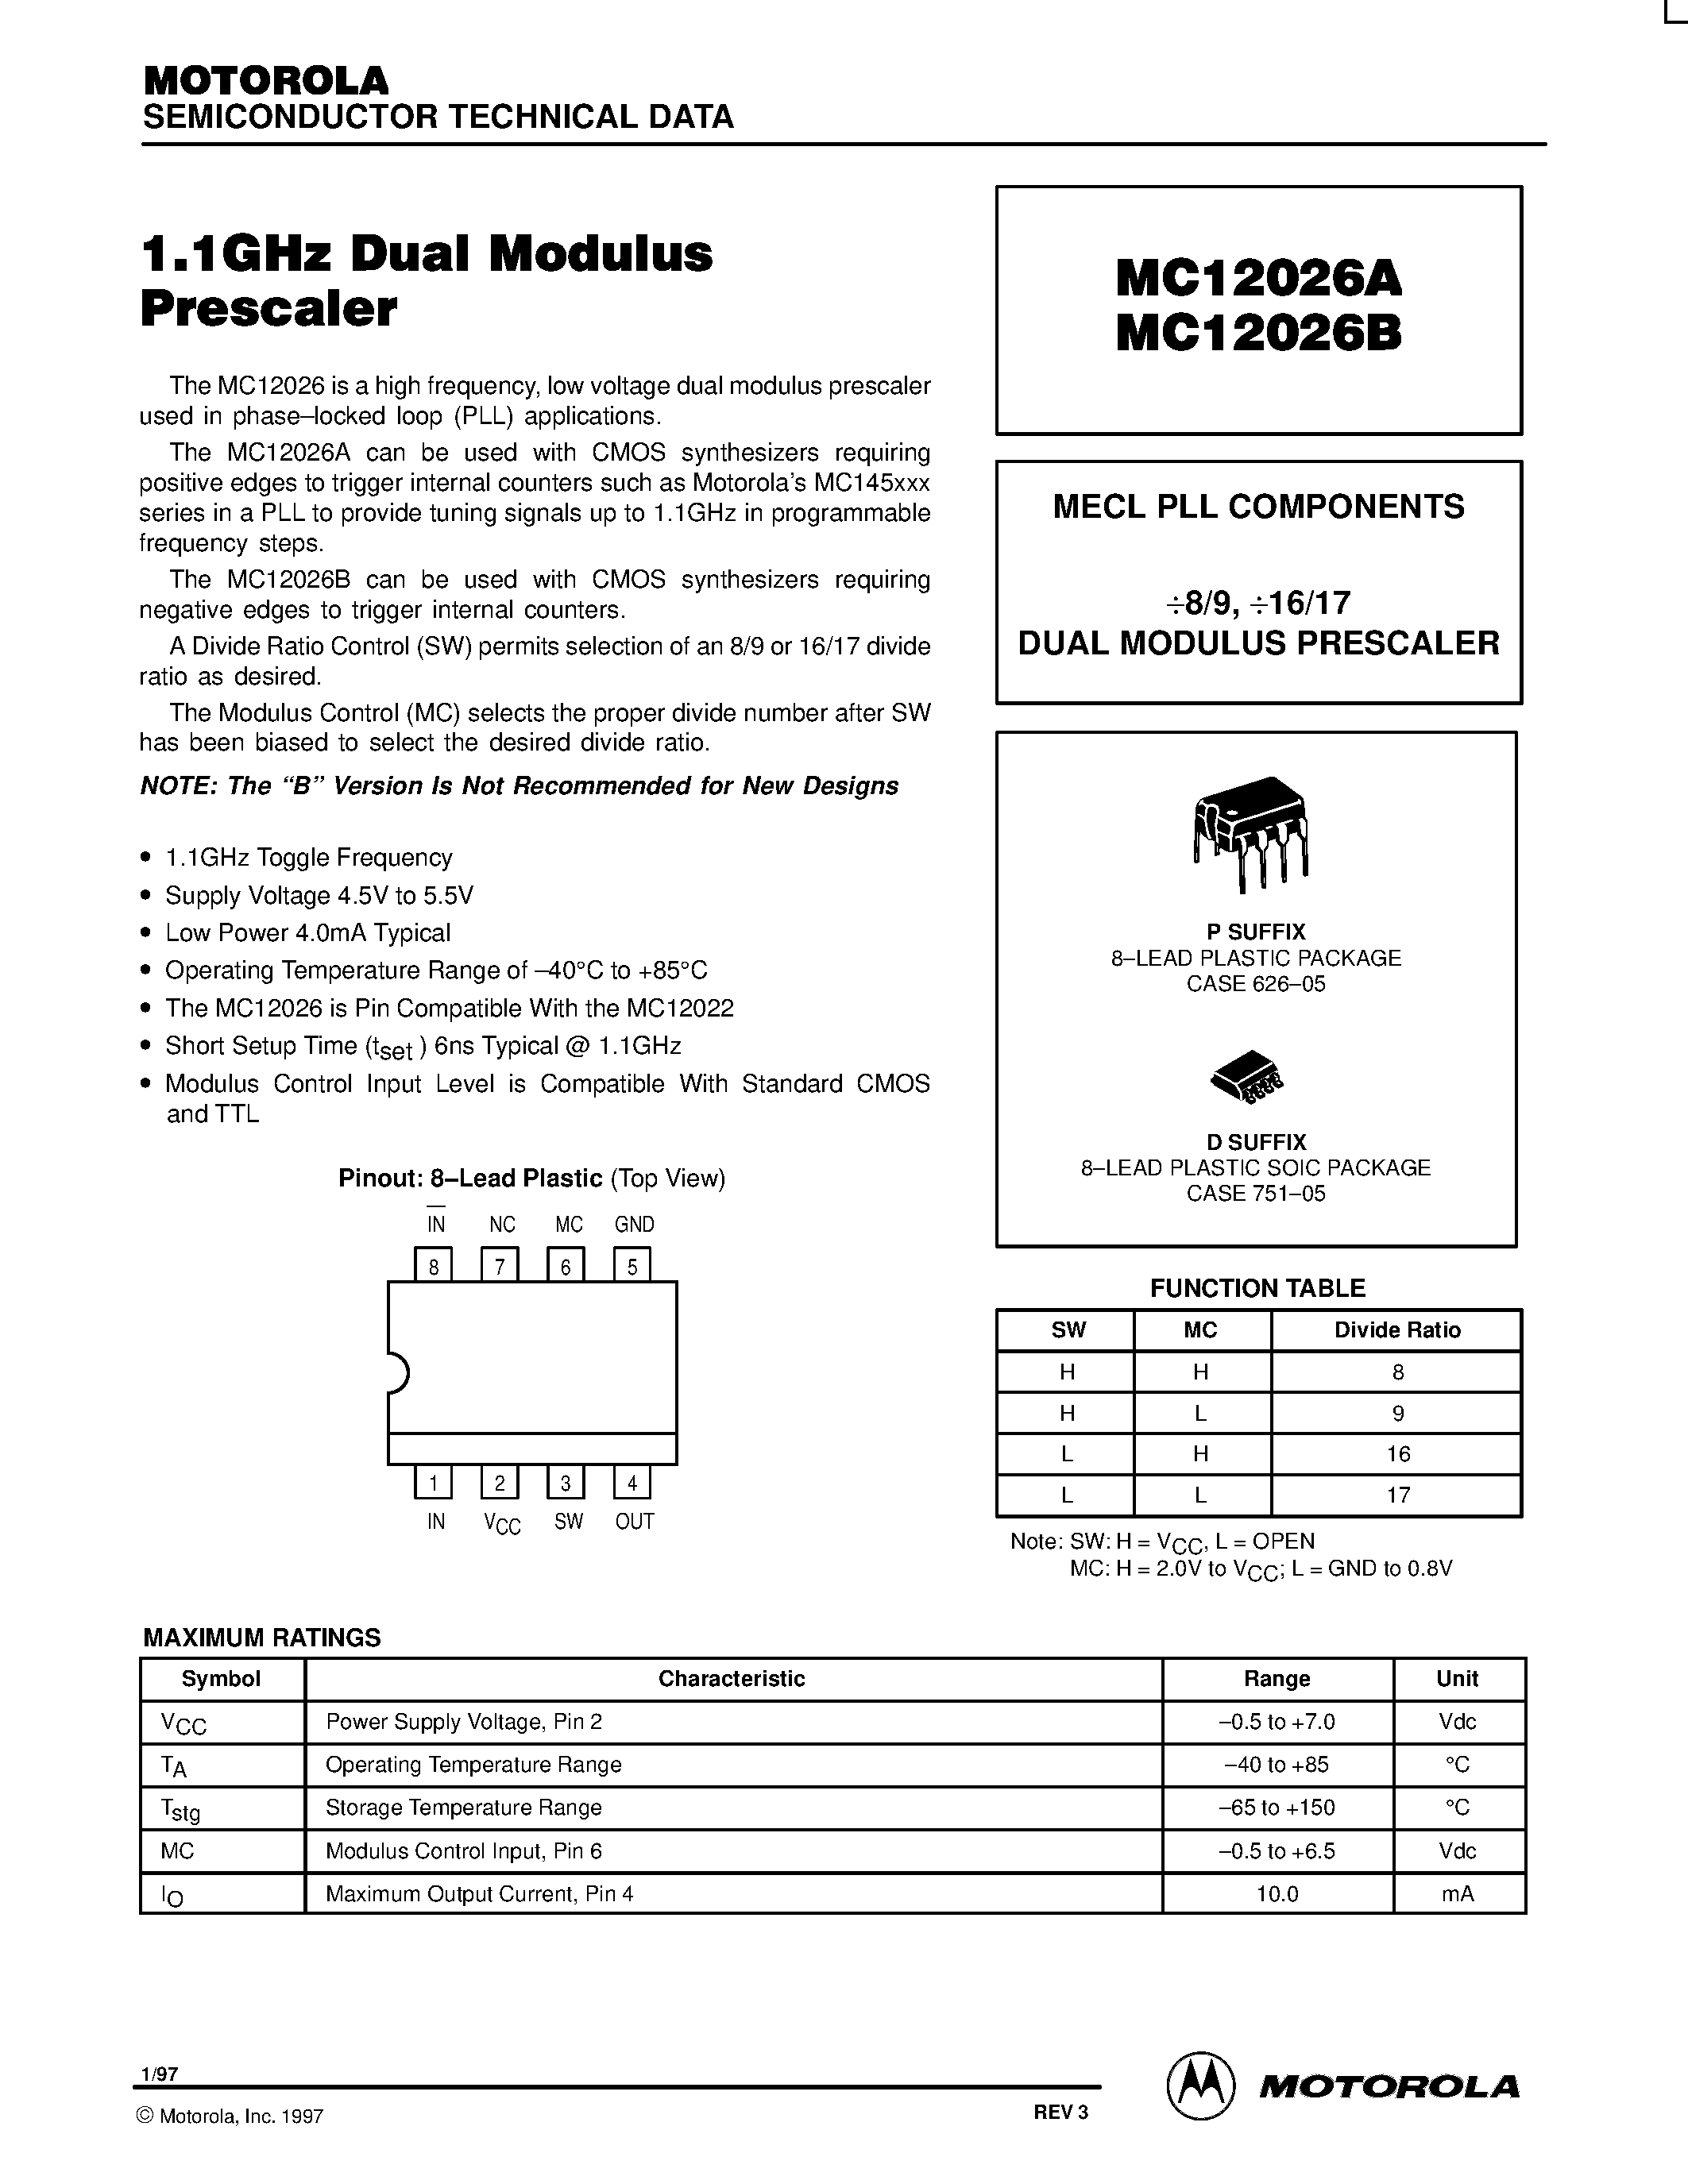 Datasheet MC12026BD - MECL PLL COMPONENTS 8/9 / 16/17 DUAL MODULUS PRESCALER page 1